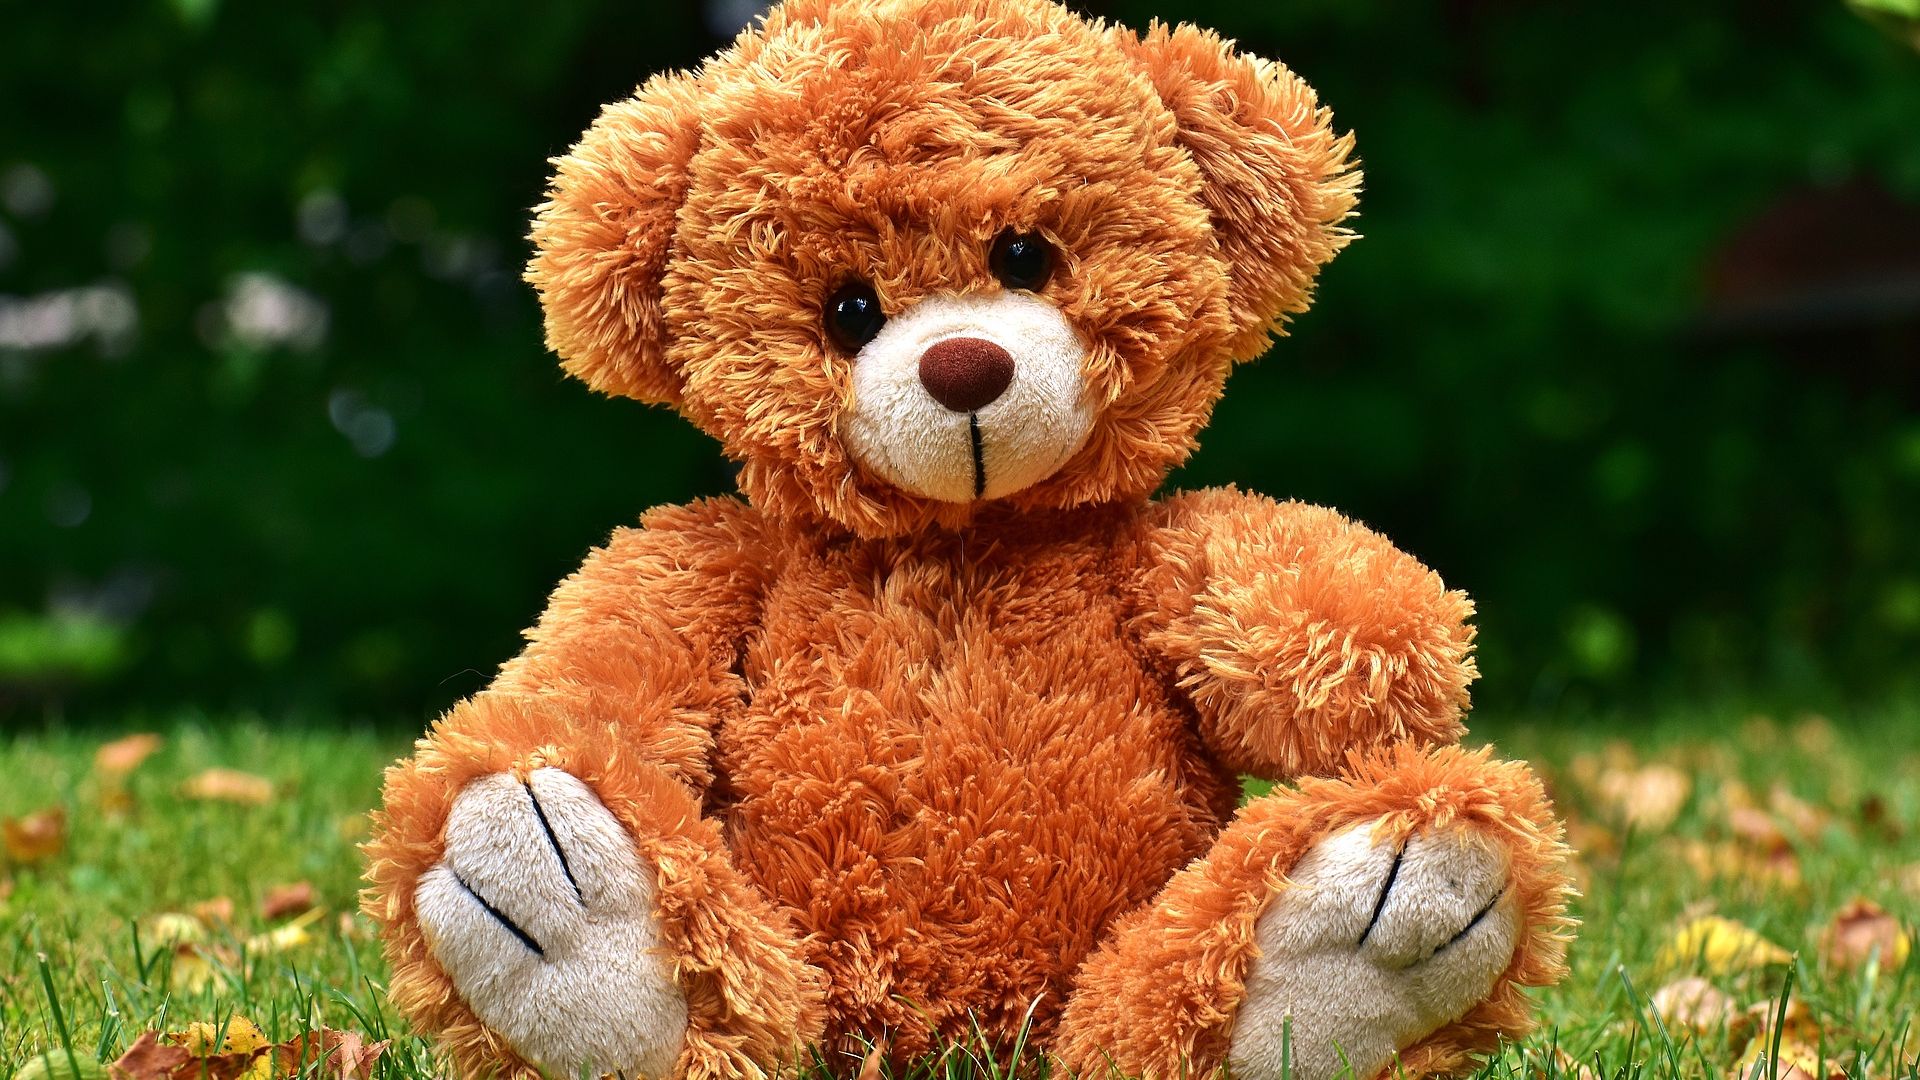 Wallpaper Teddy, cute toy, grass